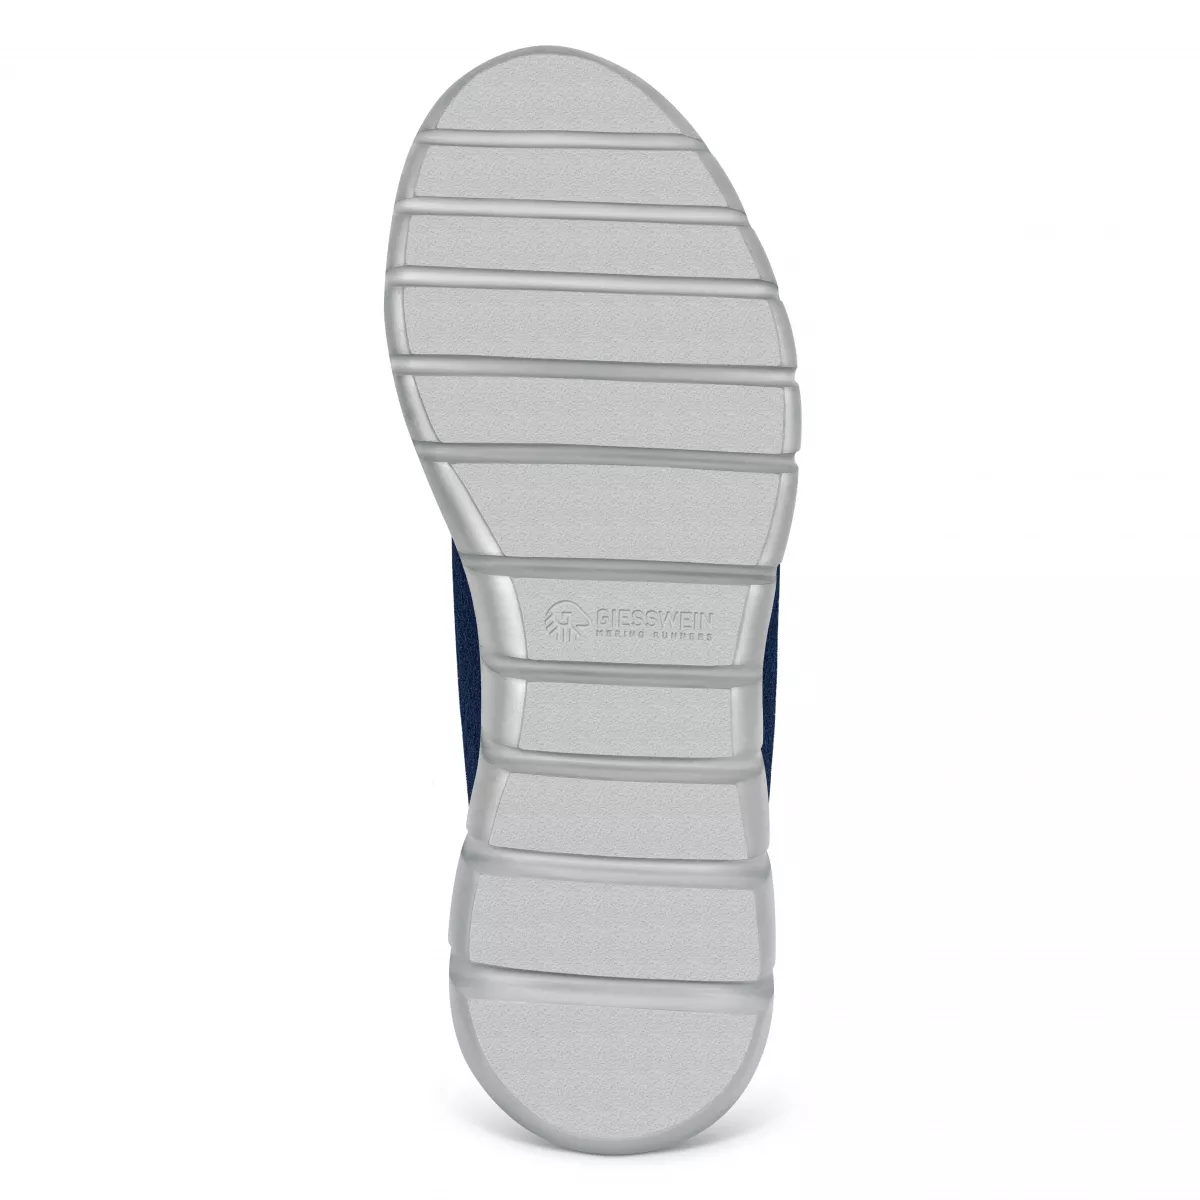 Pantofi dama Merino Runners bleumarin 640 36